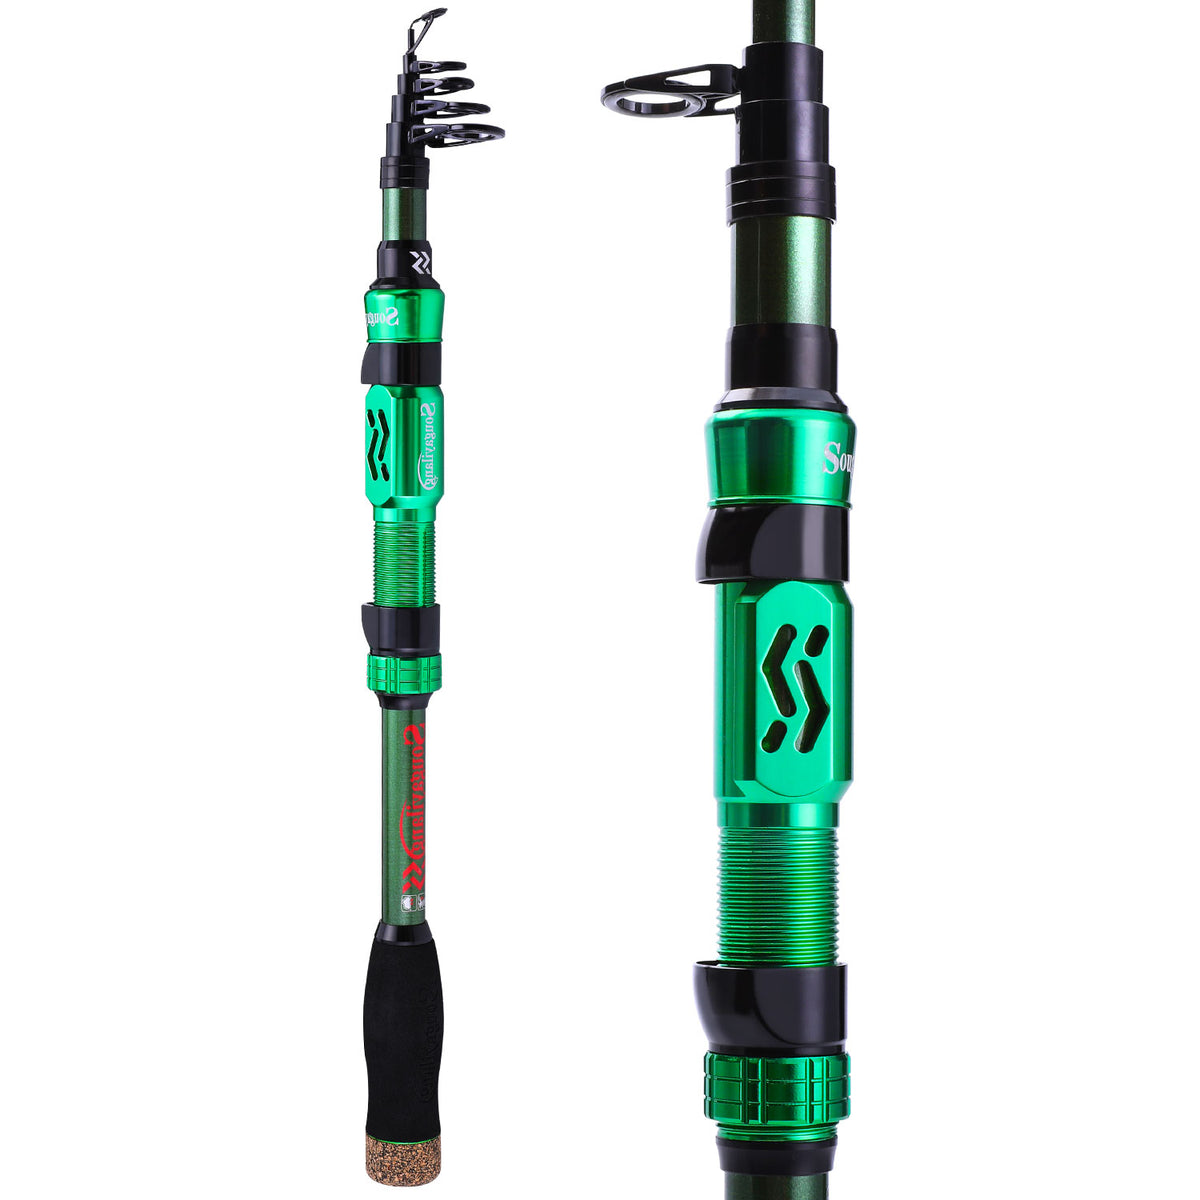 Sougayilang Telescopic Mini Fishing Rod Combos 1.3M-2.4M Carbon Fiber  Fishing Rod and 1000-5000 Spinning Fishing Reel Set for Bass Fishing Boat  Fishing